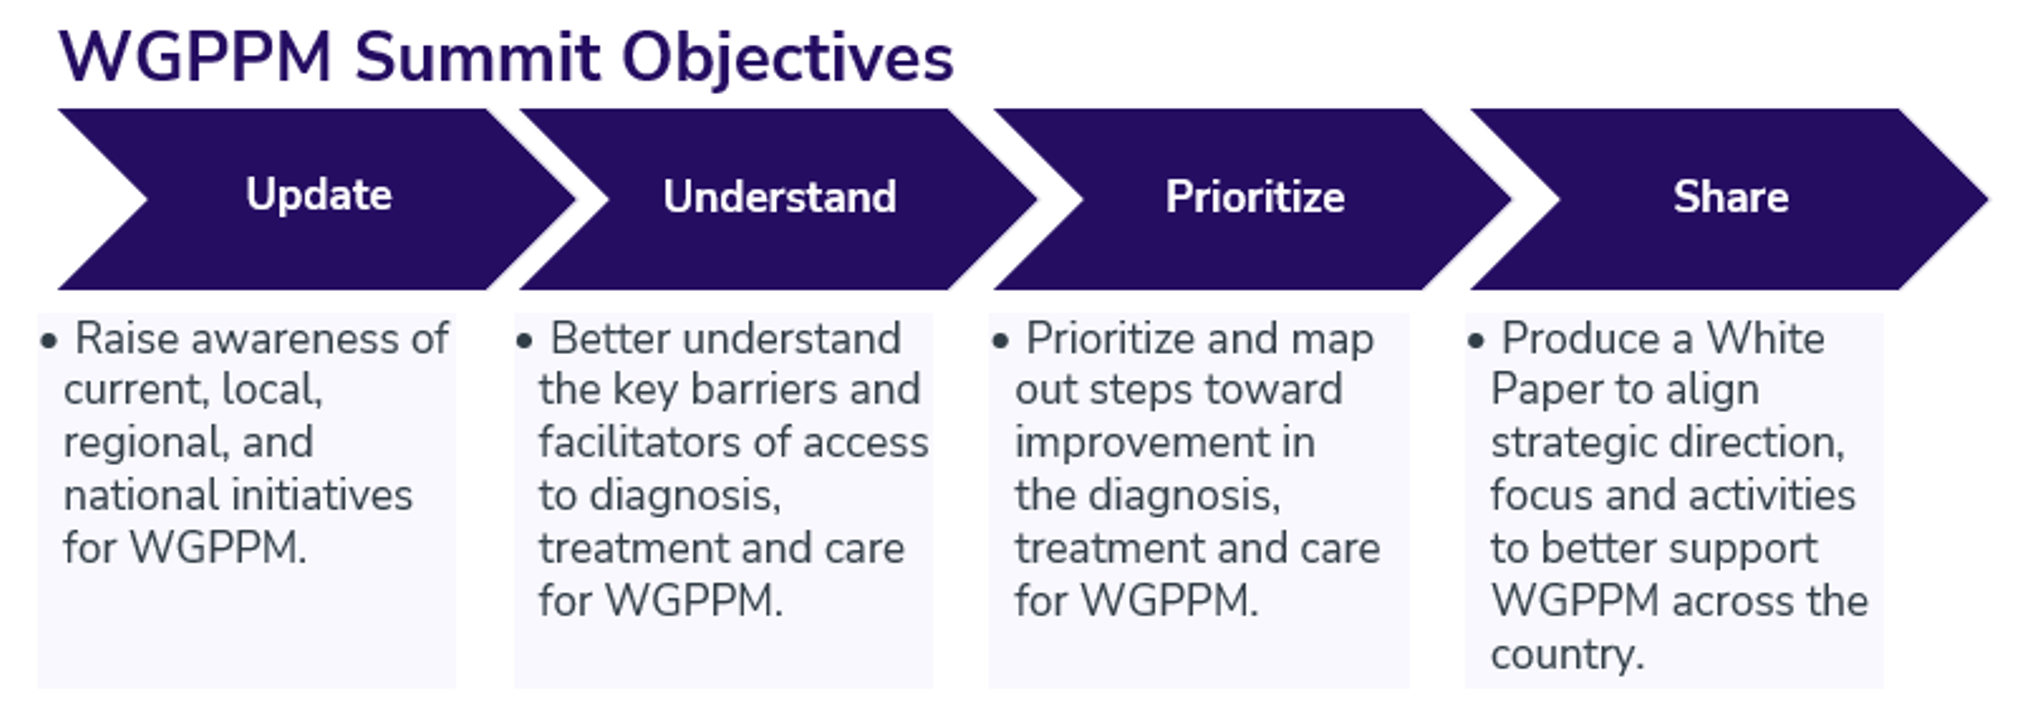 WGPPM Summit Objectives